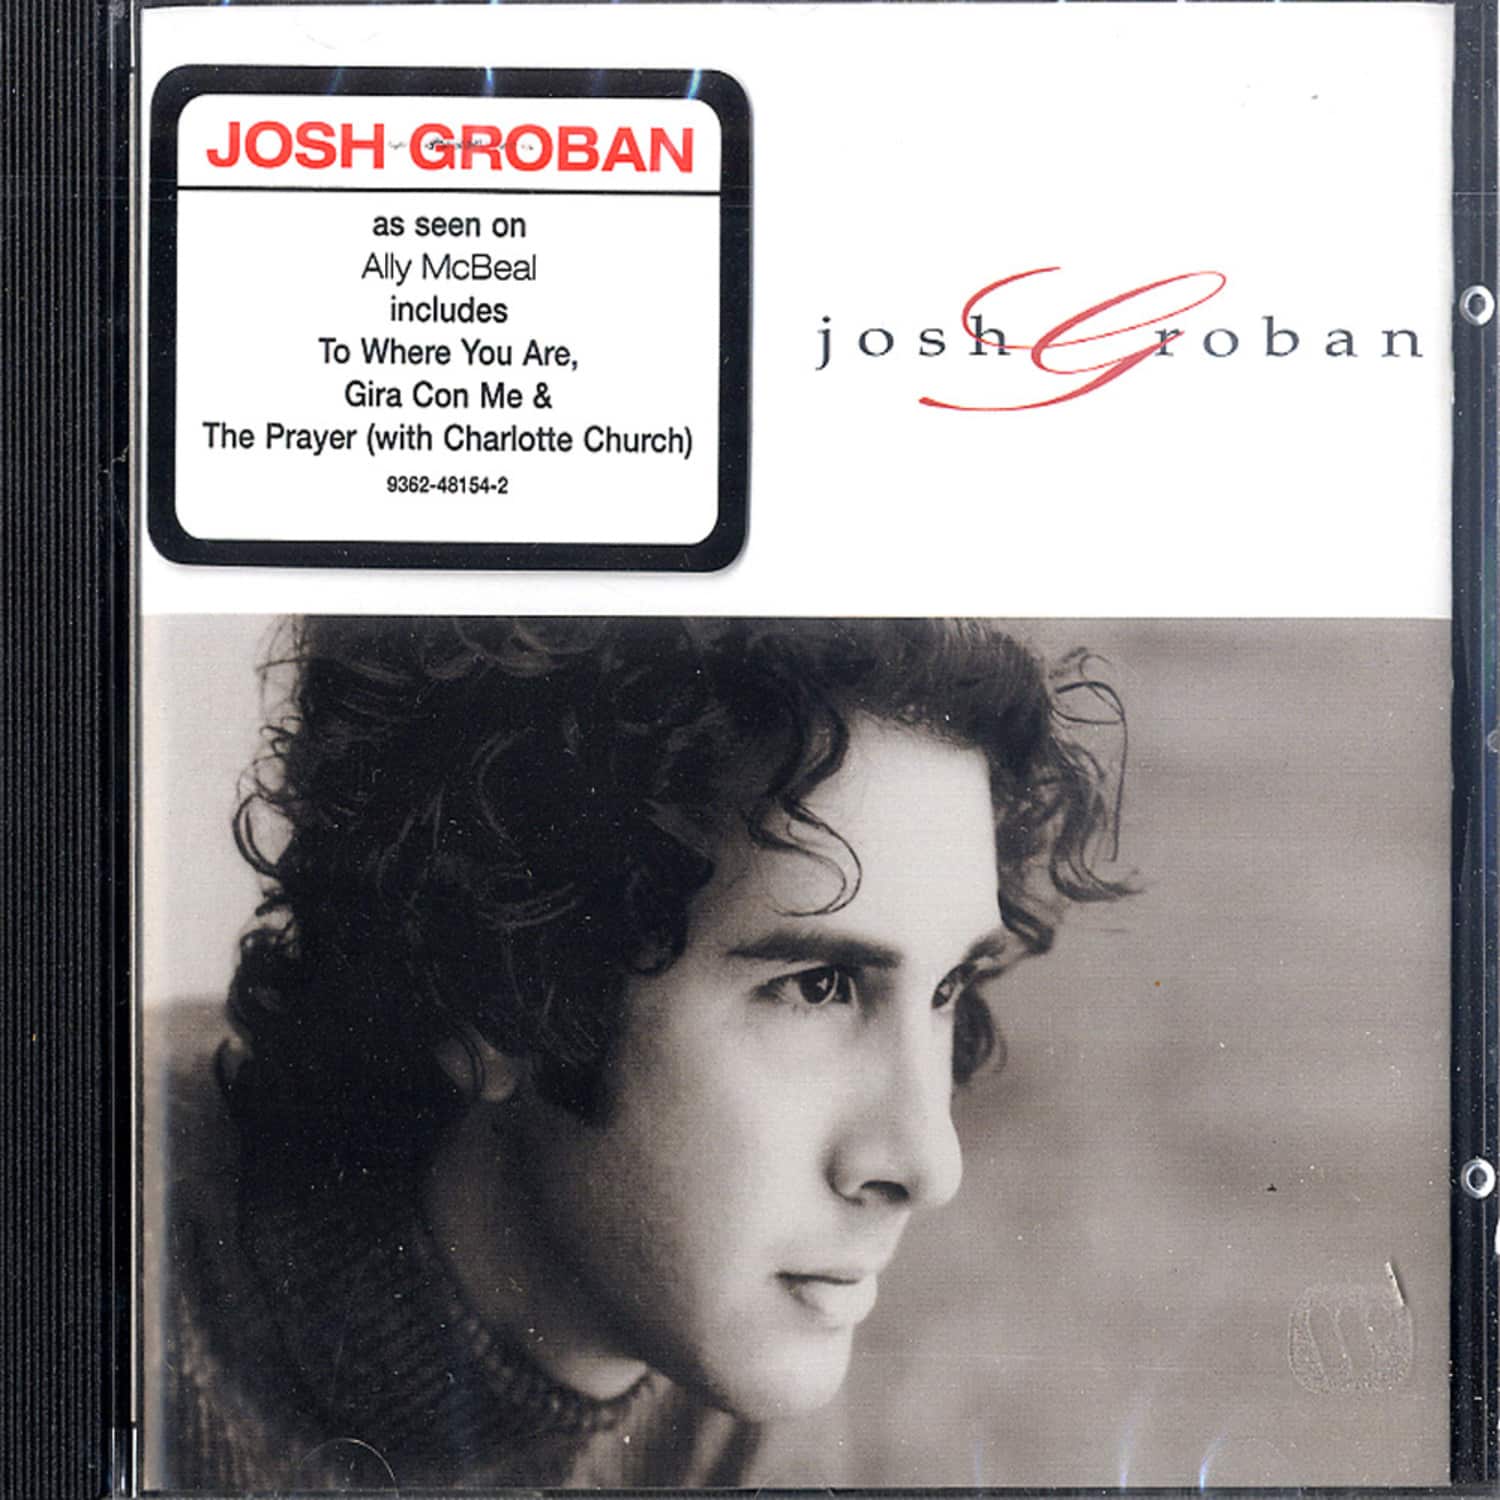 Josh Groban - JOSH GROBAN 